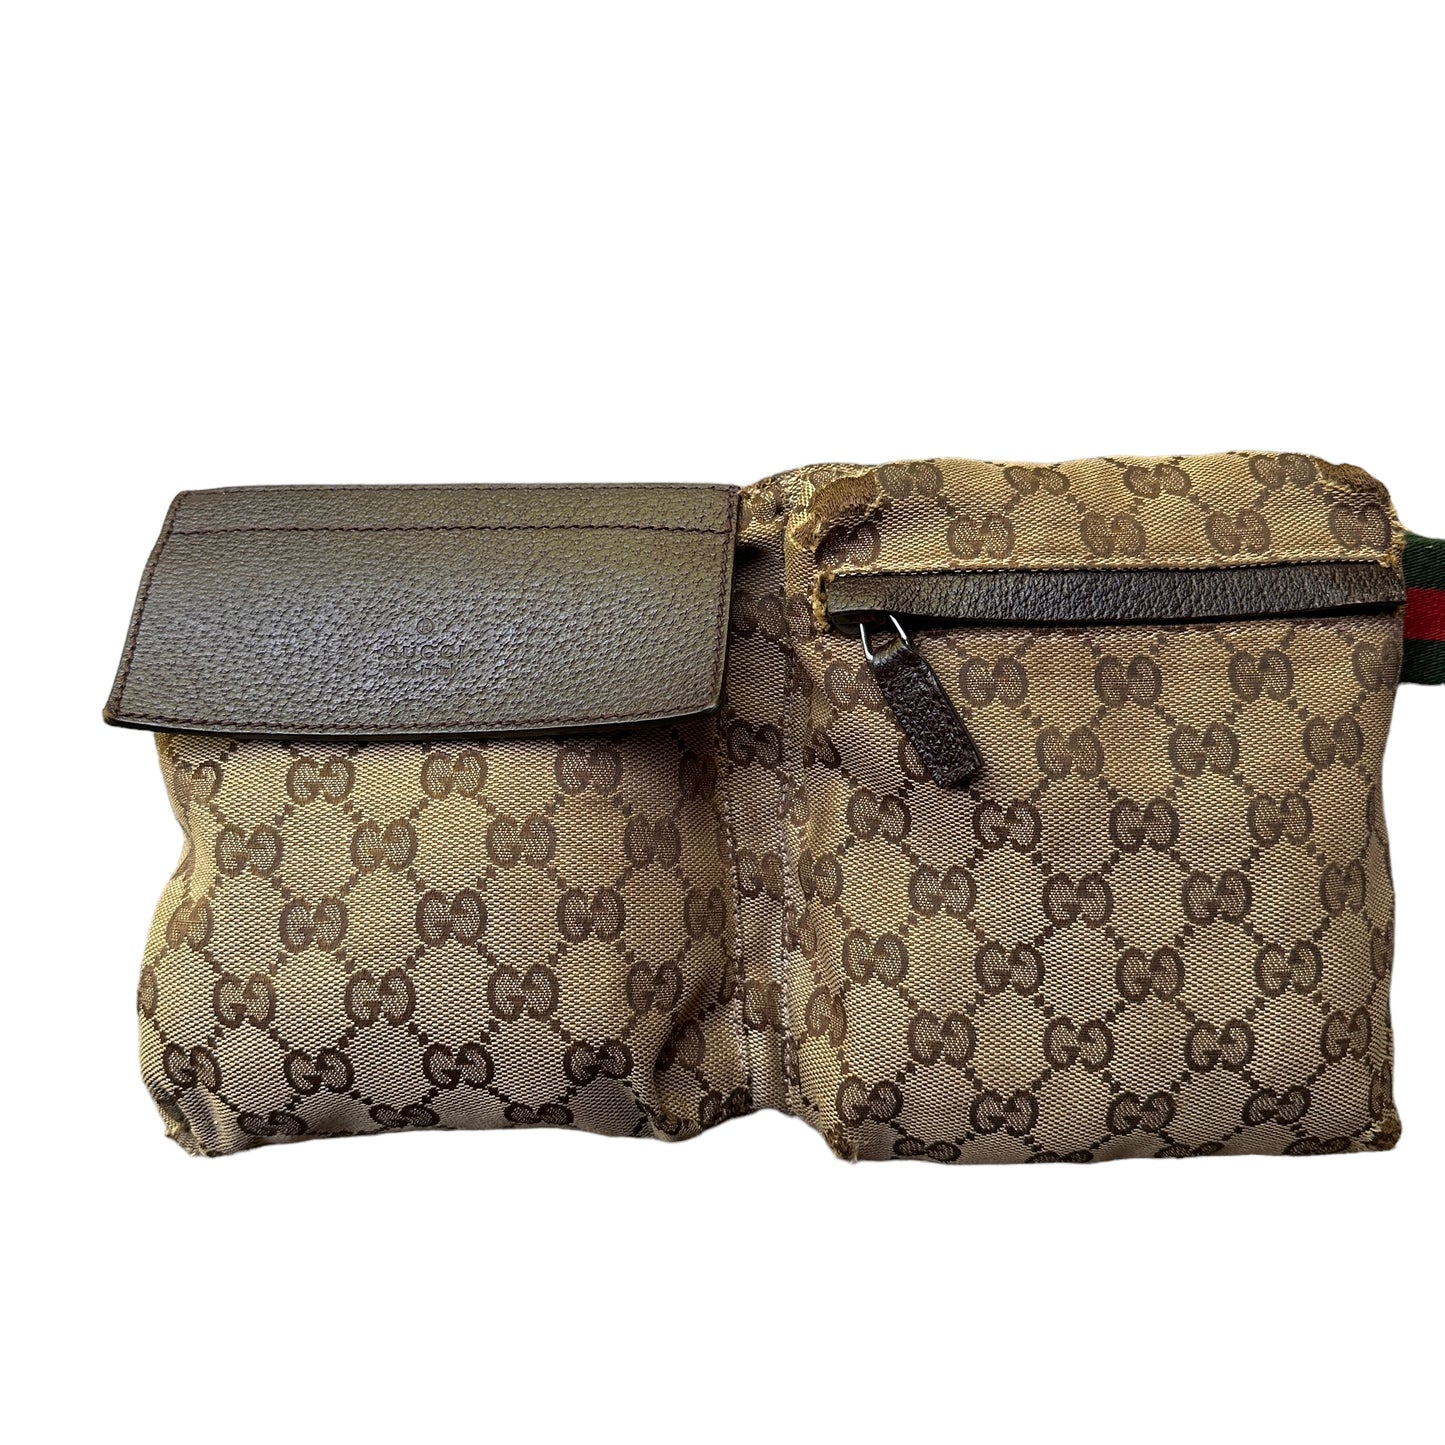 Gucci waist bag